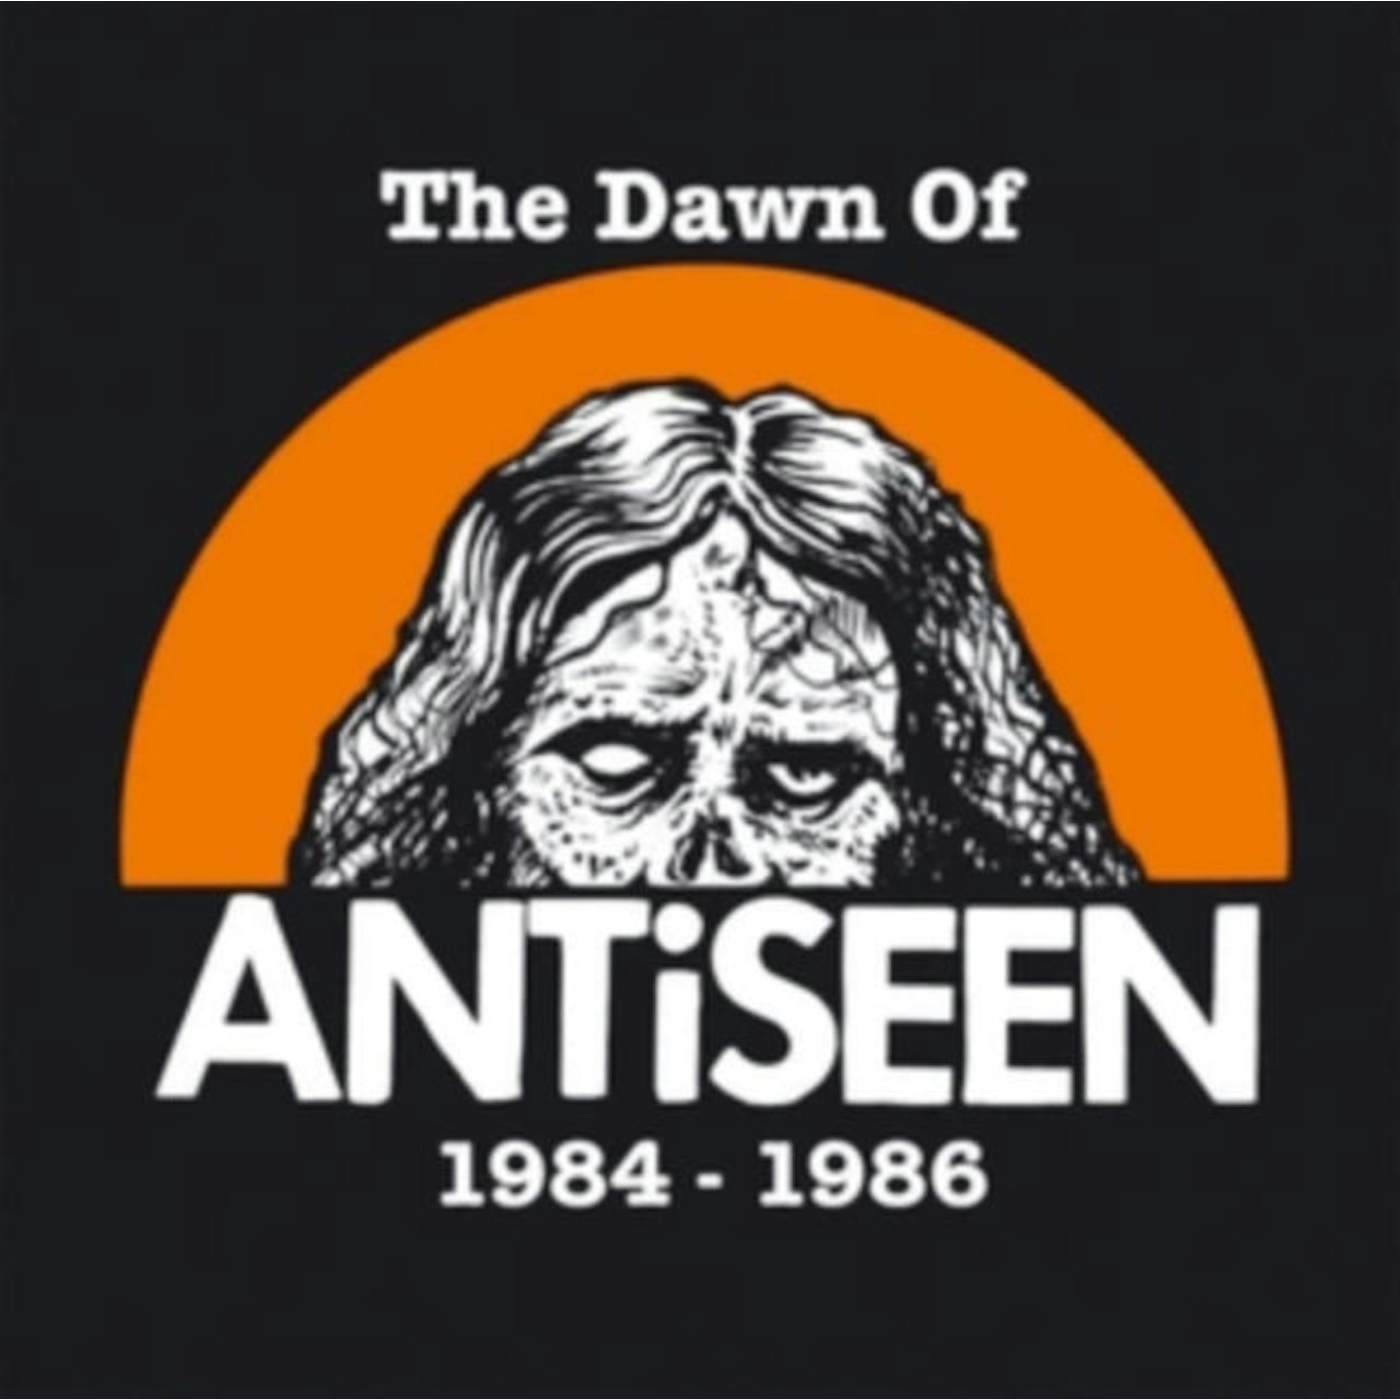 Antiseen LP - Dawn Of Antiseen 1984-1986 The (Vinyl)